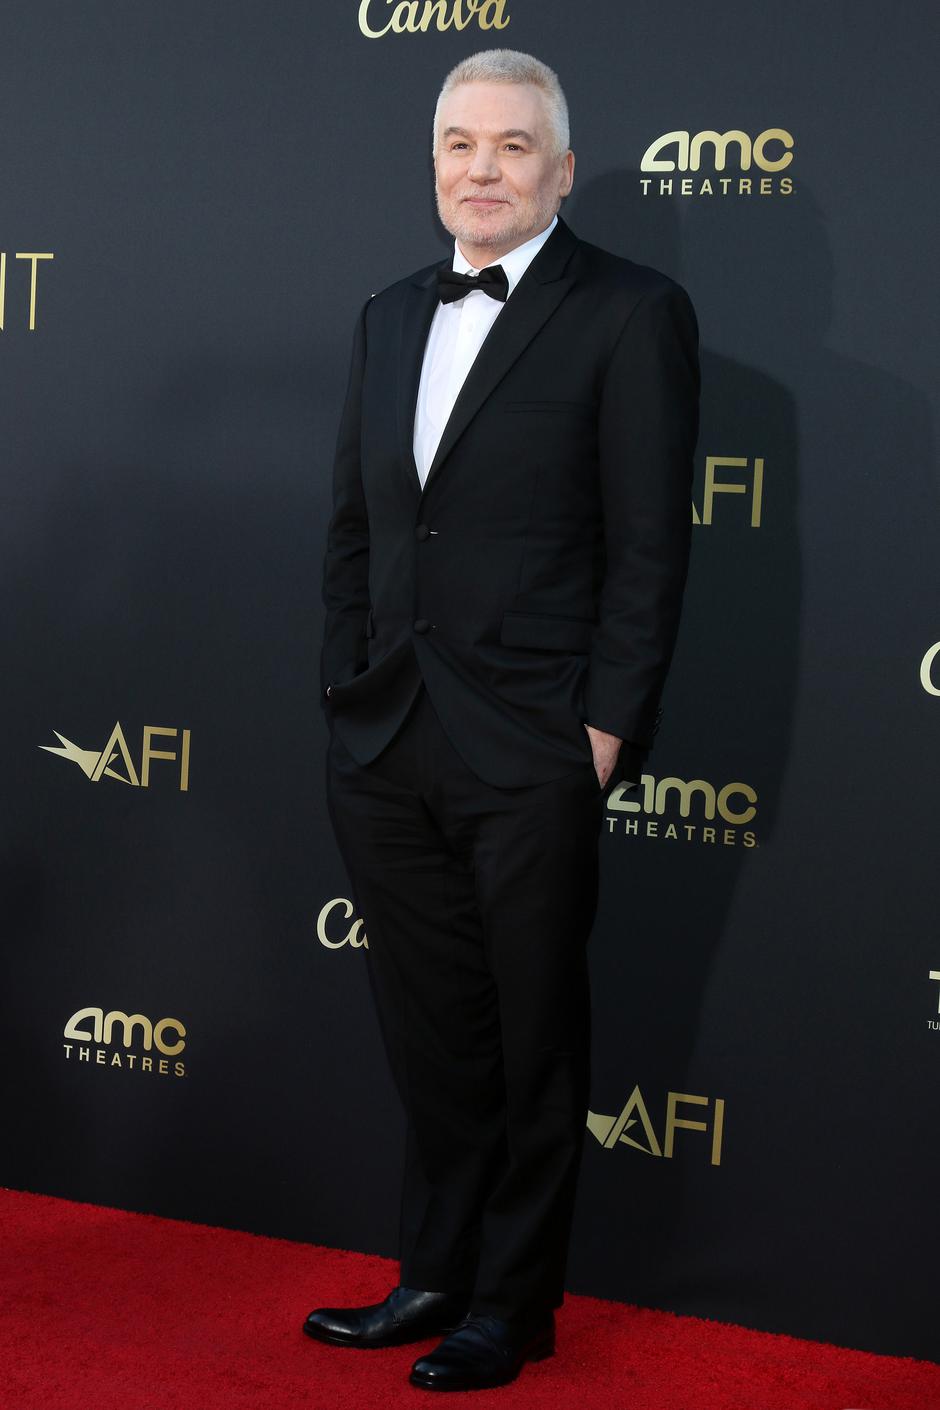 AFI Lifetime Achievement Awards IHO Nicole Kidman